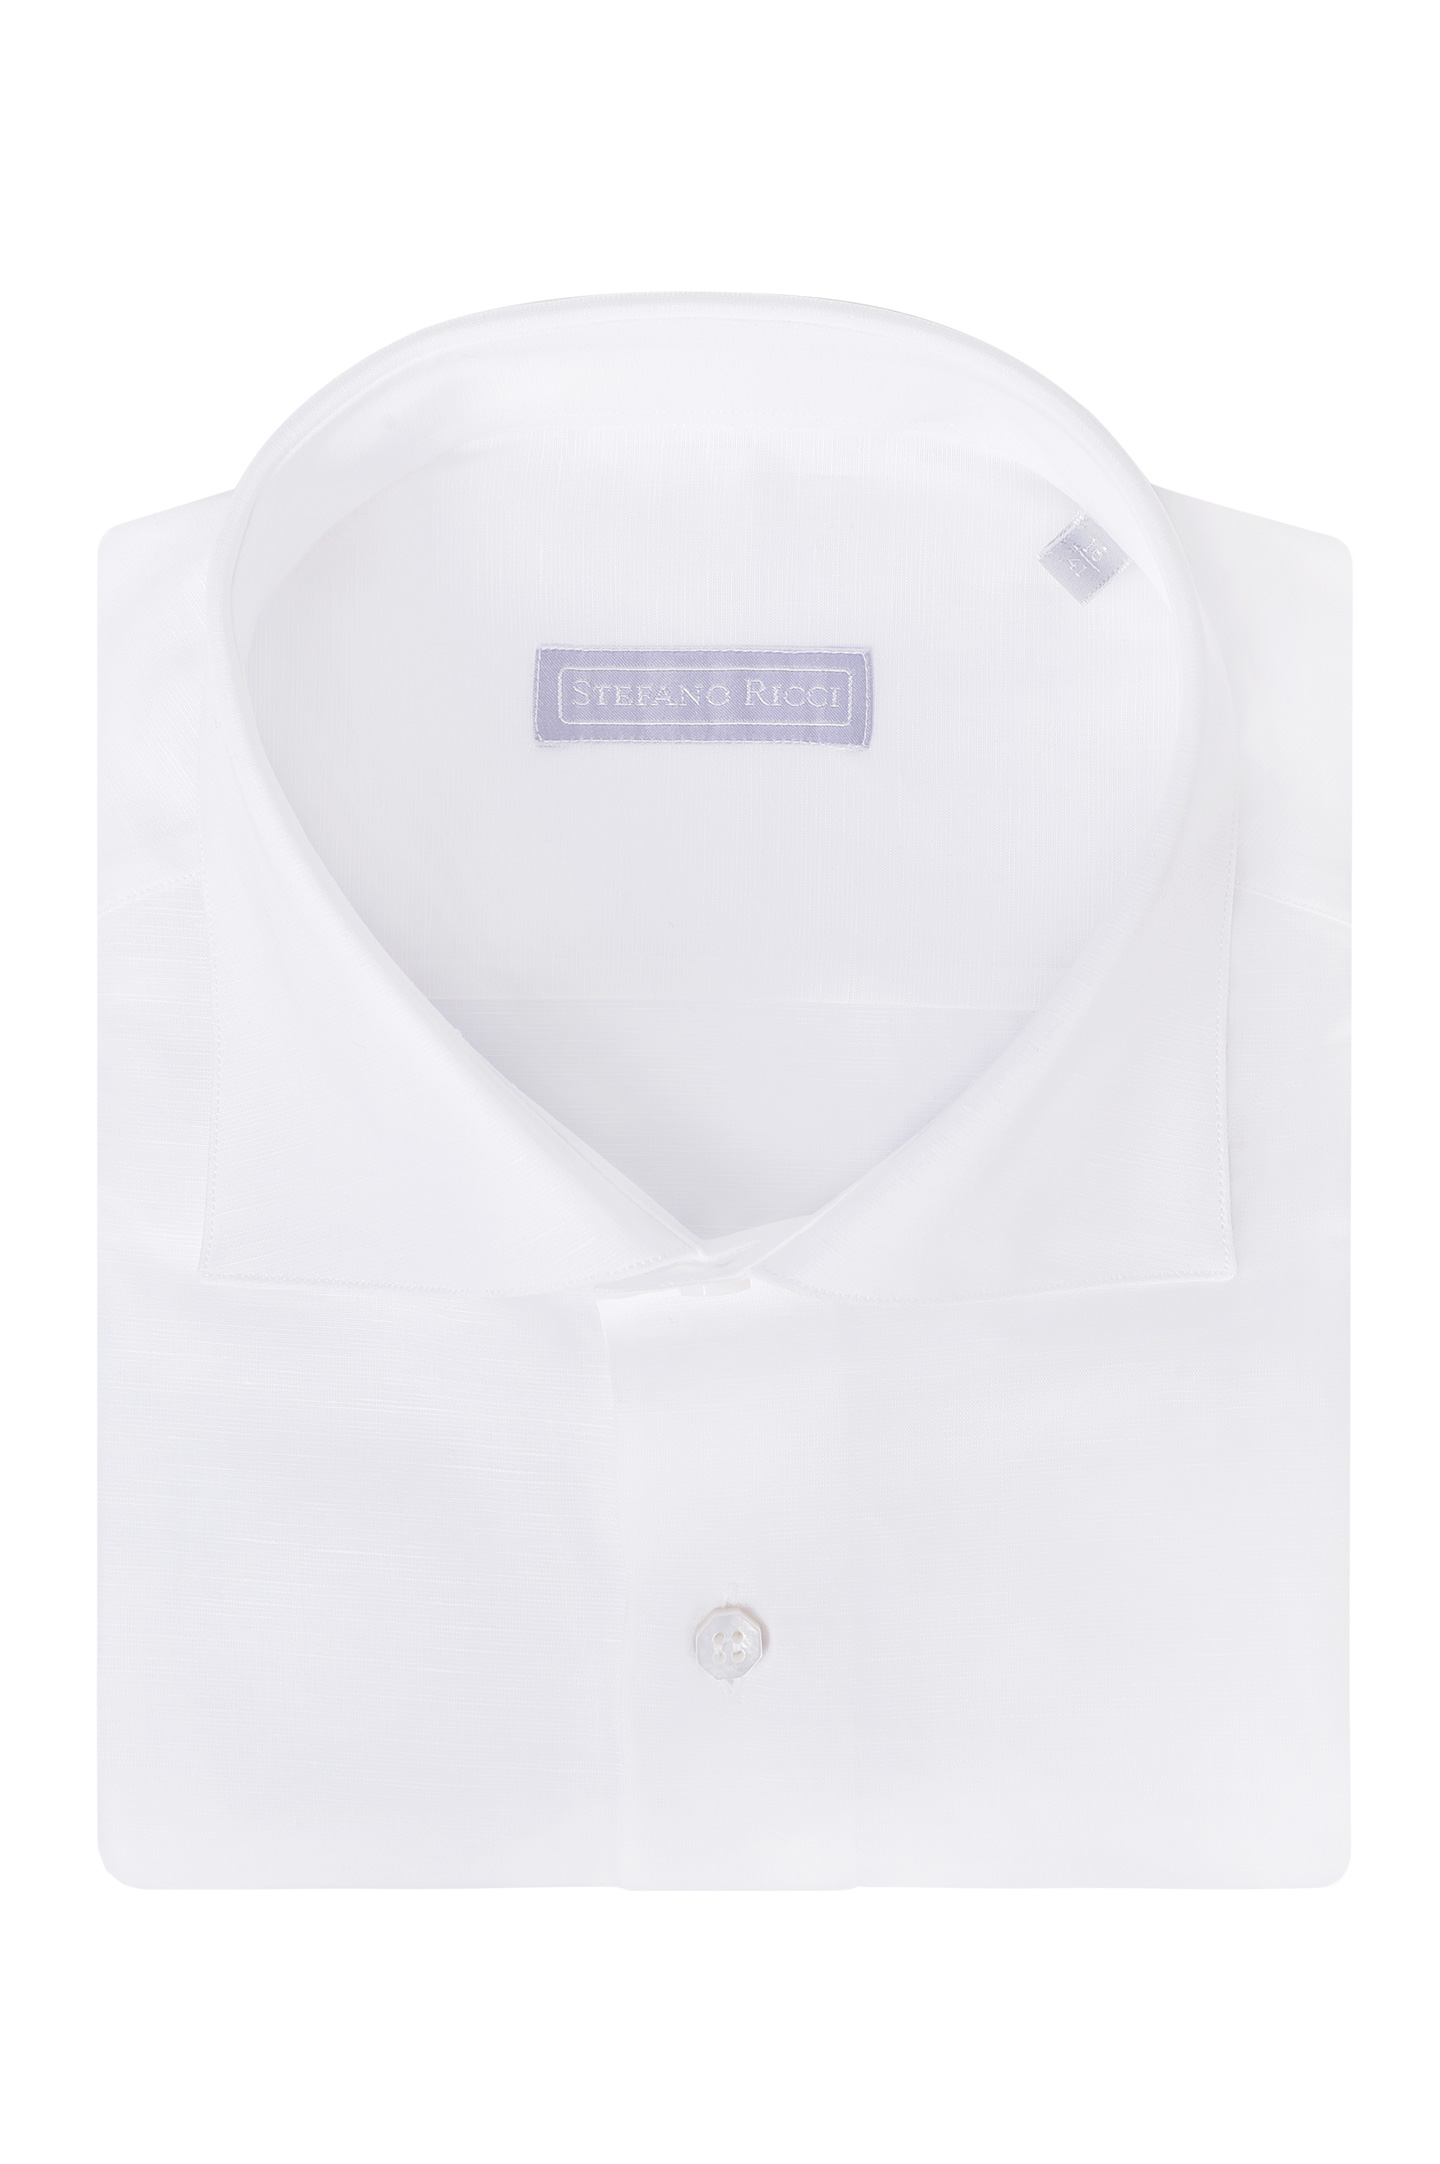 Рубашка STEFANO RICCI MC002668 S1952, цвет: Белый, Мужской